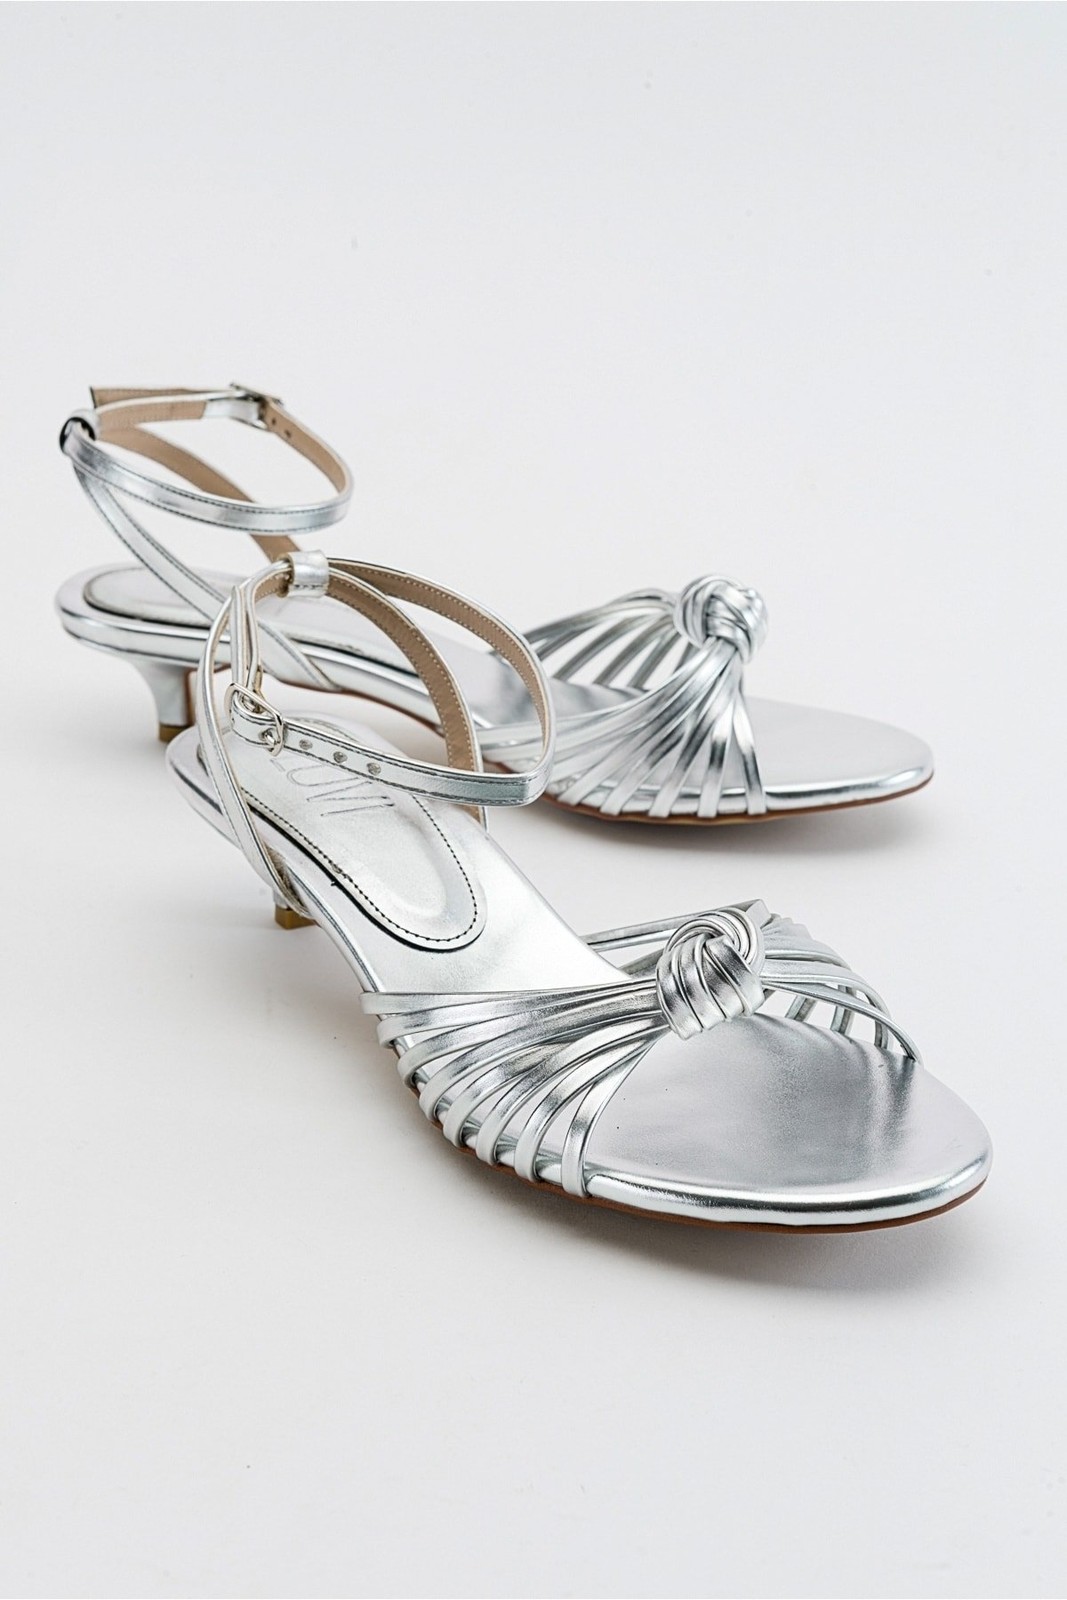 LuviShoes Vind Lame Women's Metallic Heeled Sandals